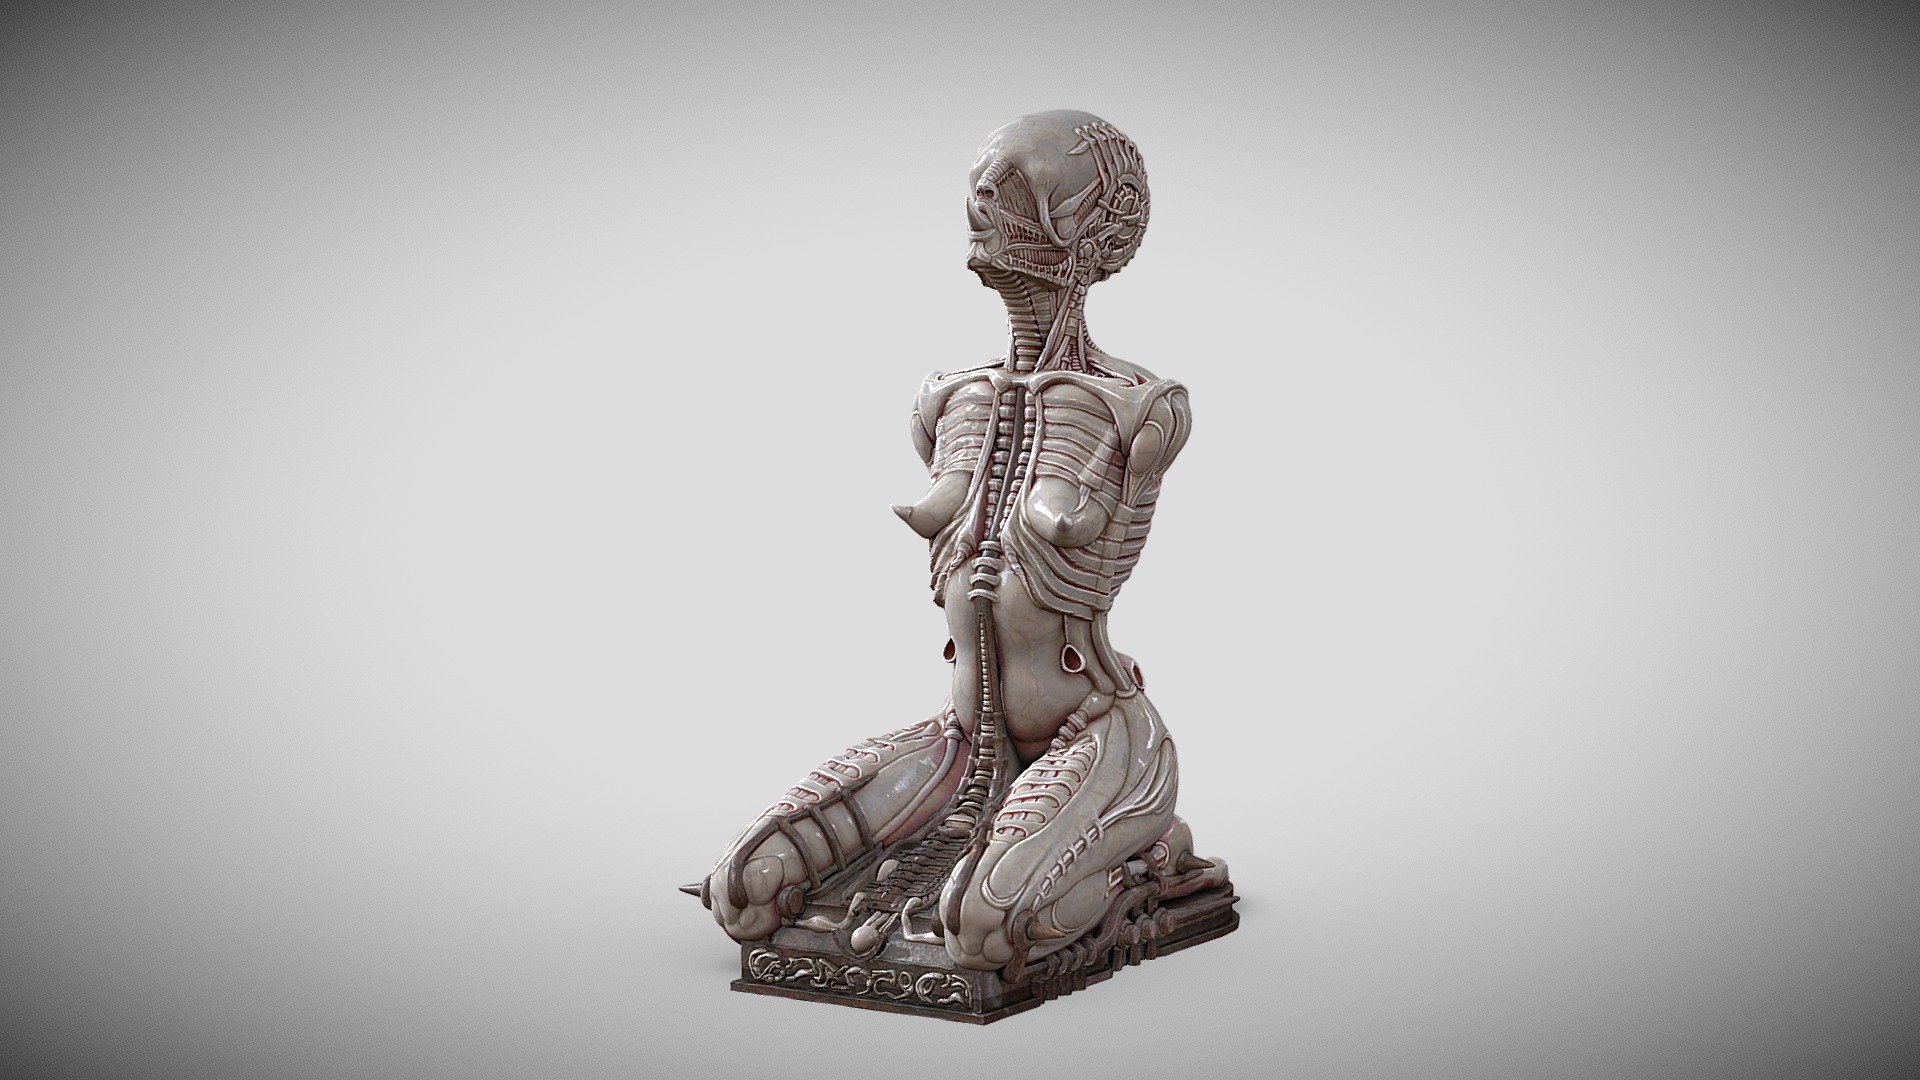 3DModel - inspiration from giger arts - Alien kneeling - 3D model by Alex Dubnoff (@alexdubnoff) 3d model